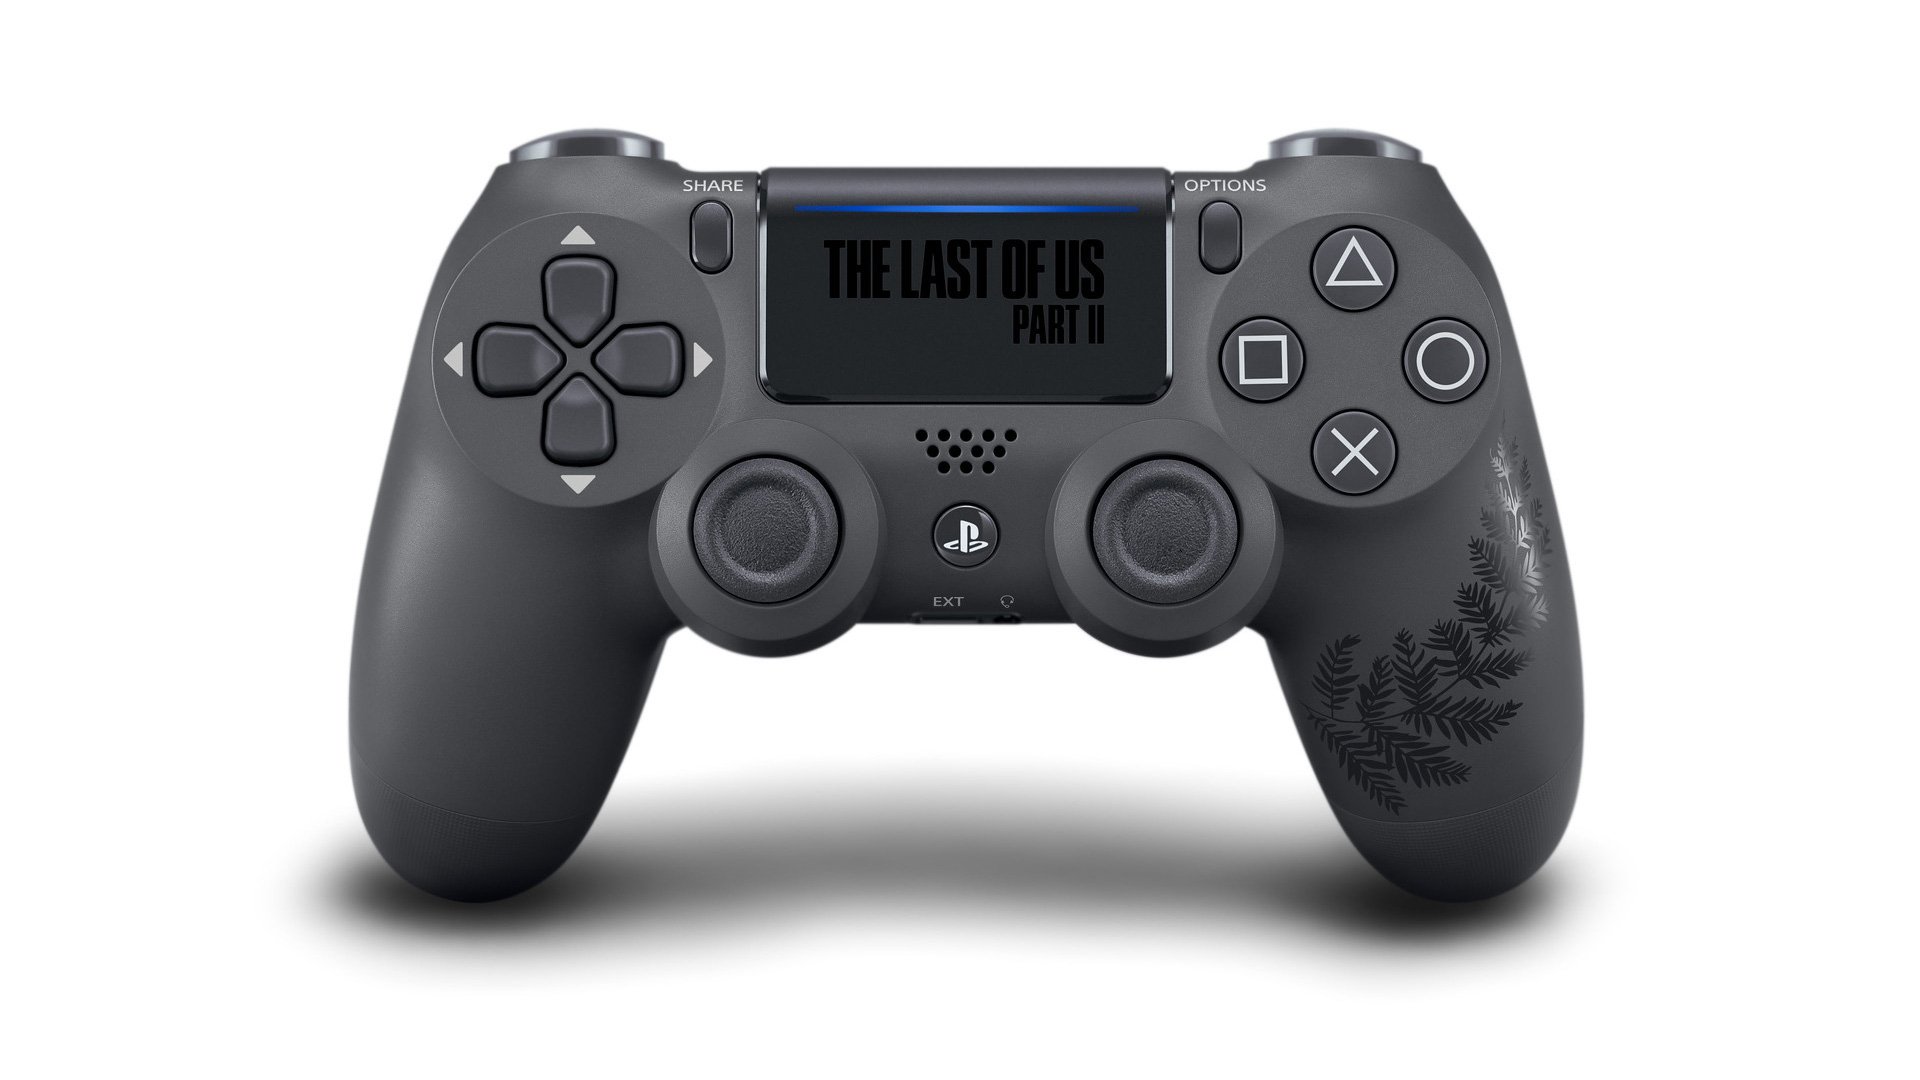 The Last of Us Part II DualShock 4